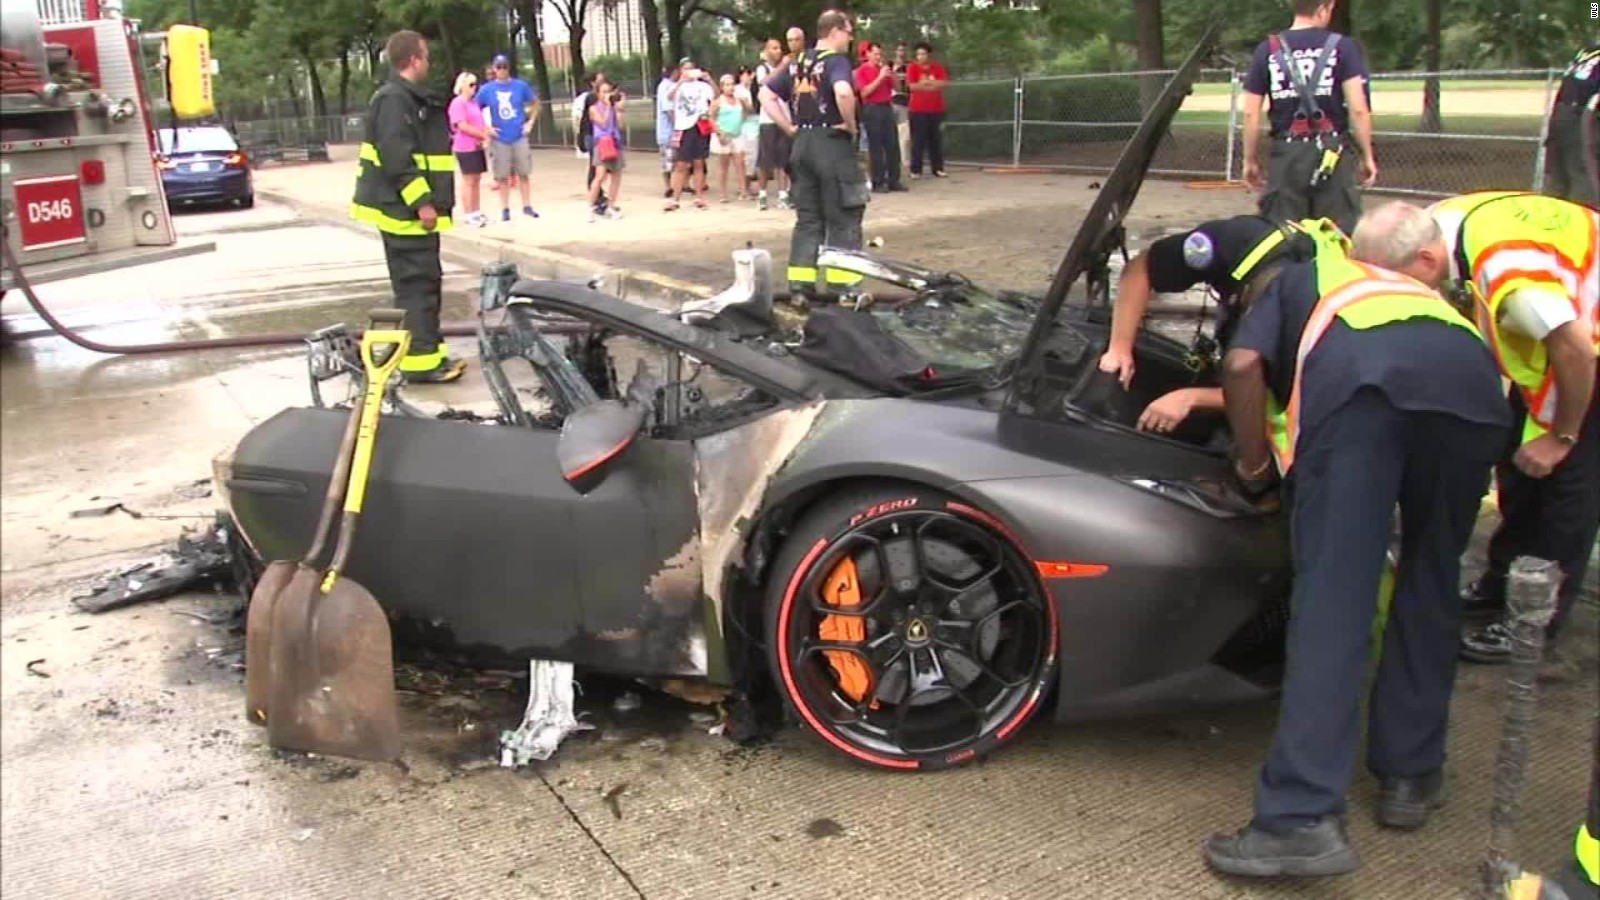 Choque divide en dos partes a un Lamborghini | Video | CNN